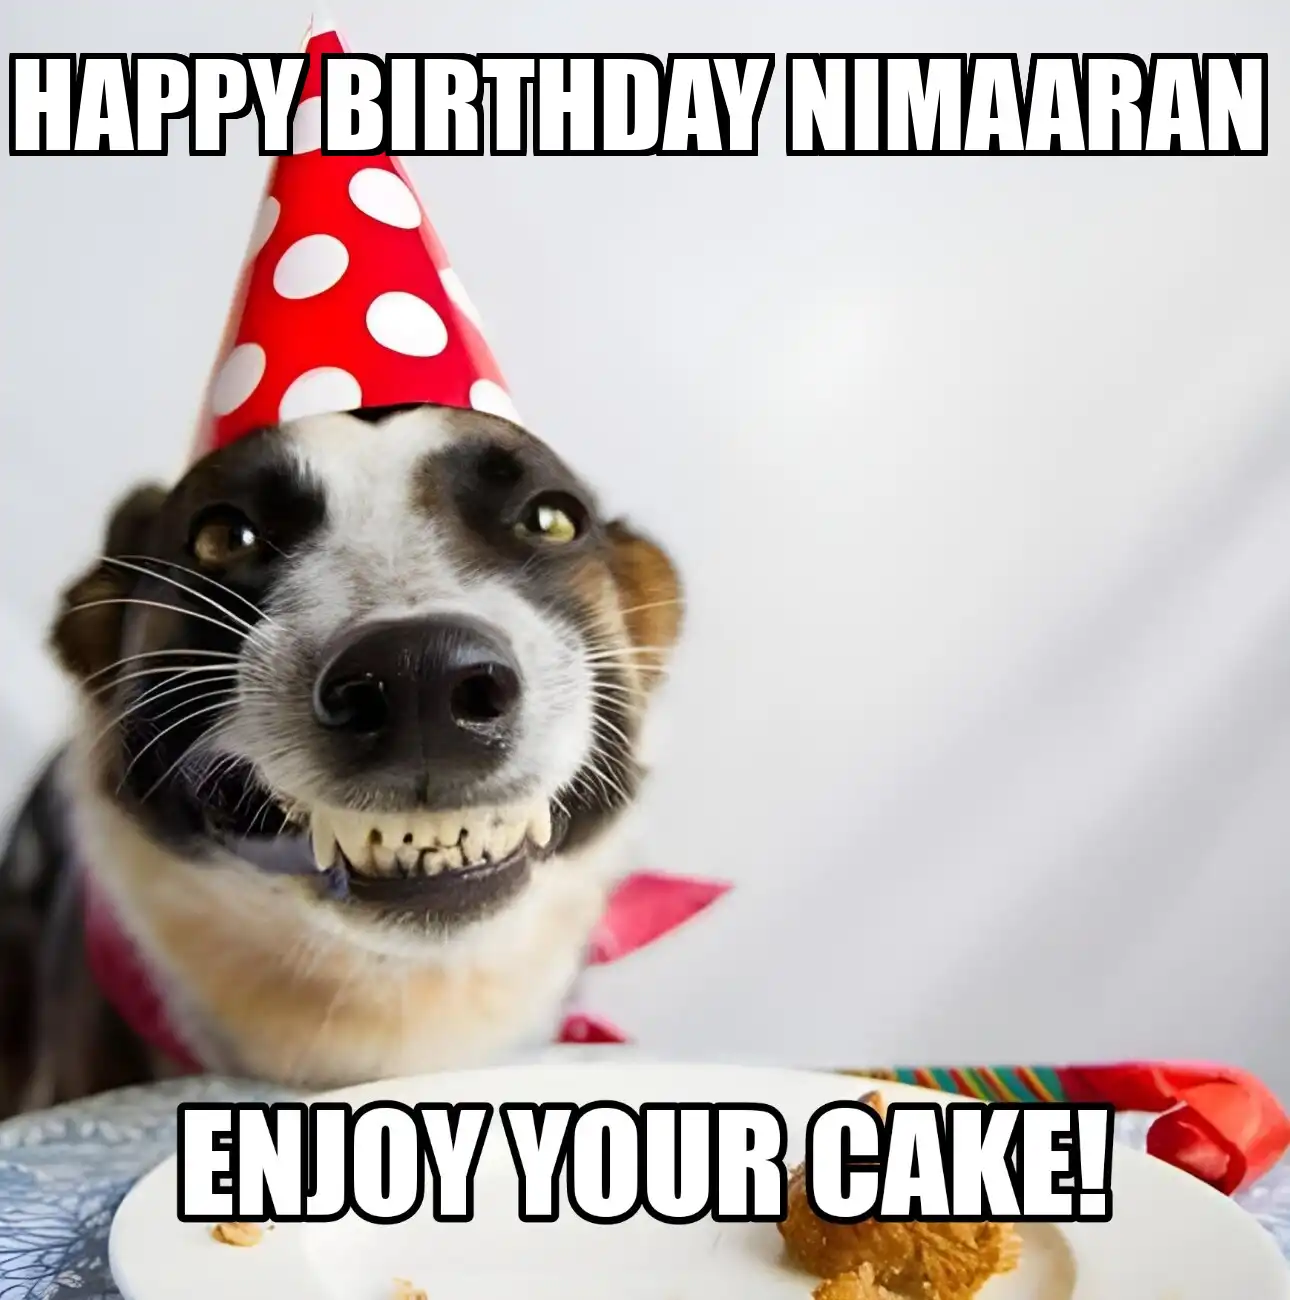 Happy Birthday Nimaaran Enjoy Your Cake Dog Meme